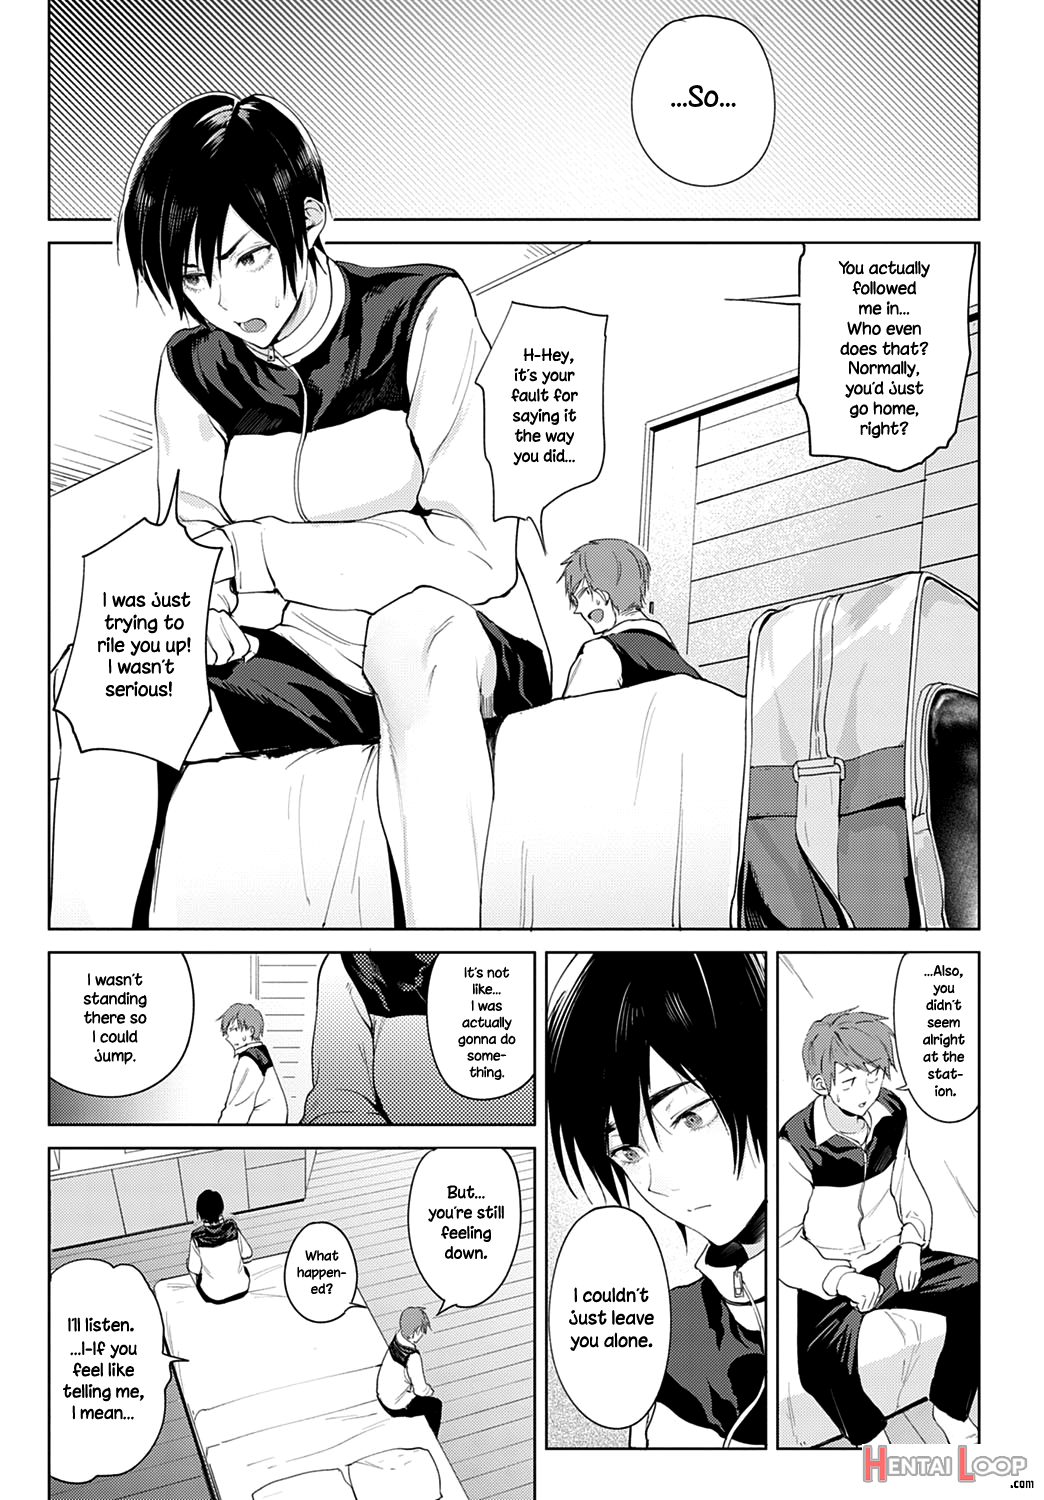 Chikihouyuu page 5